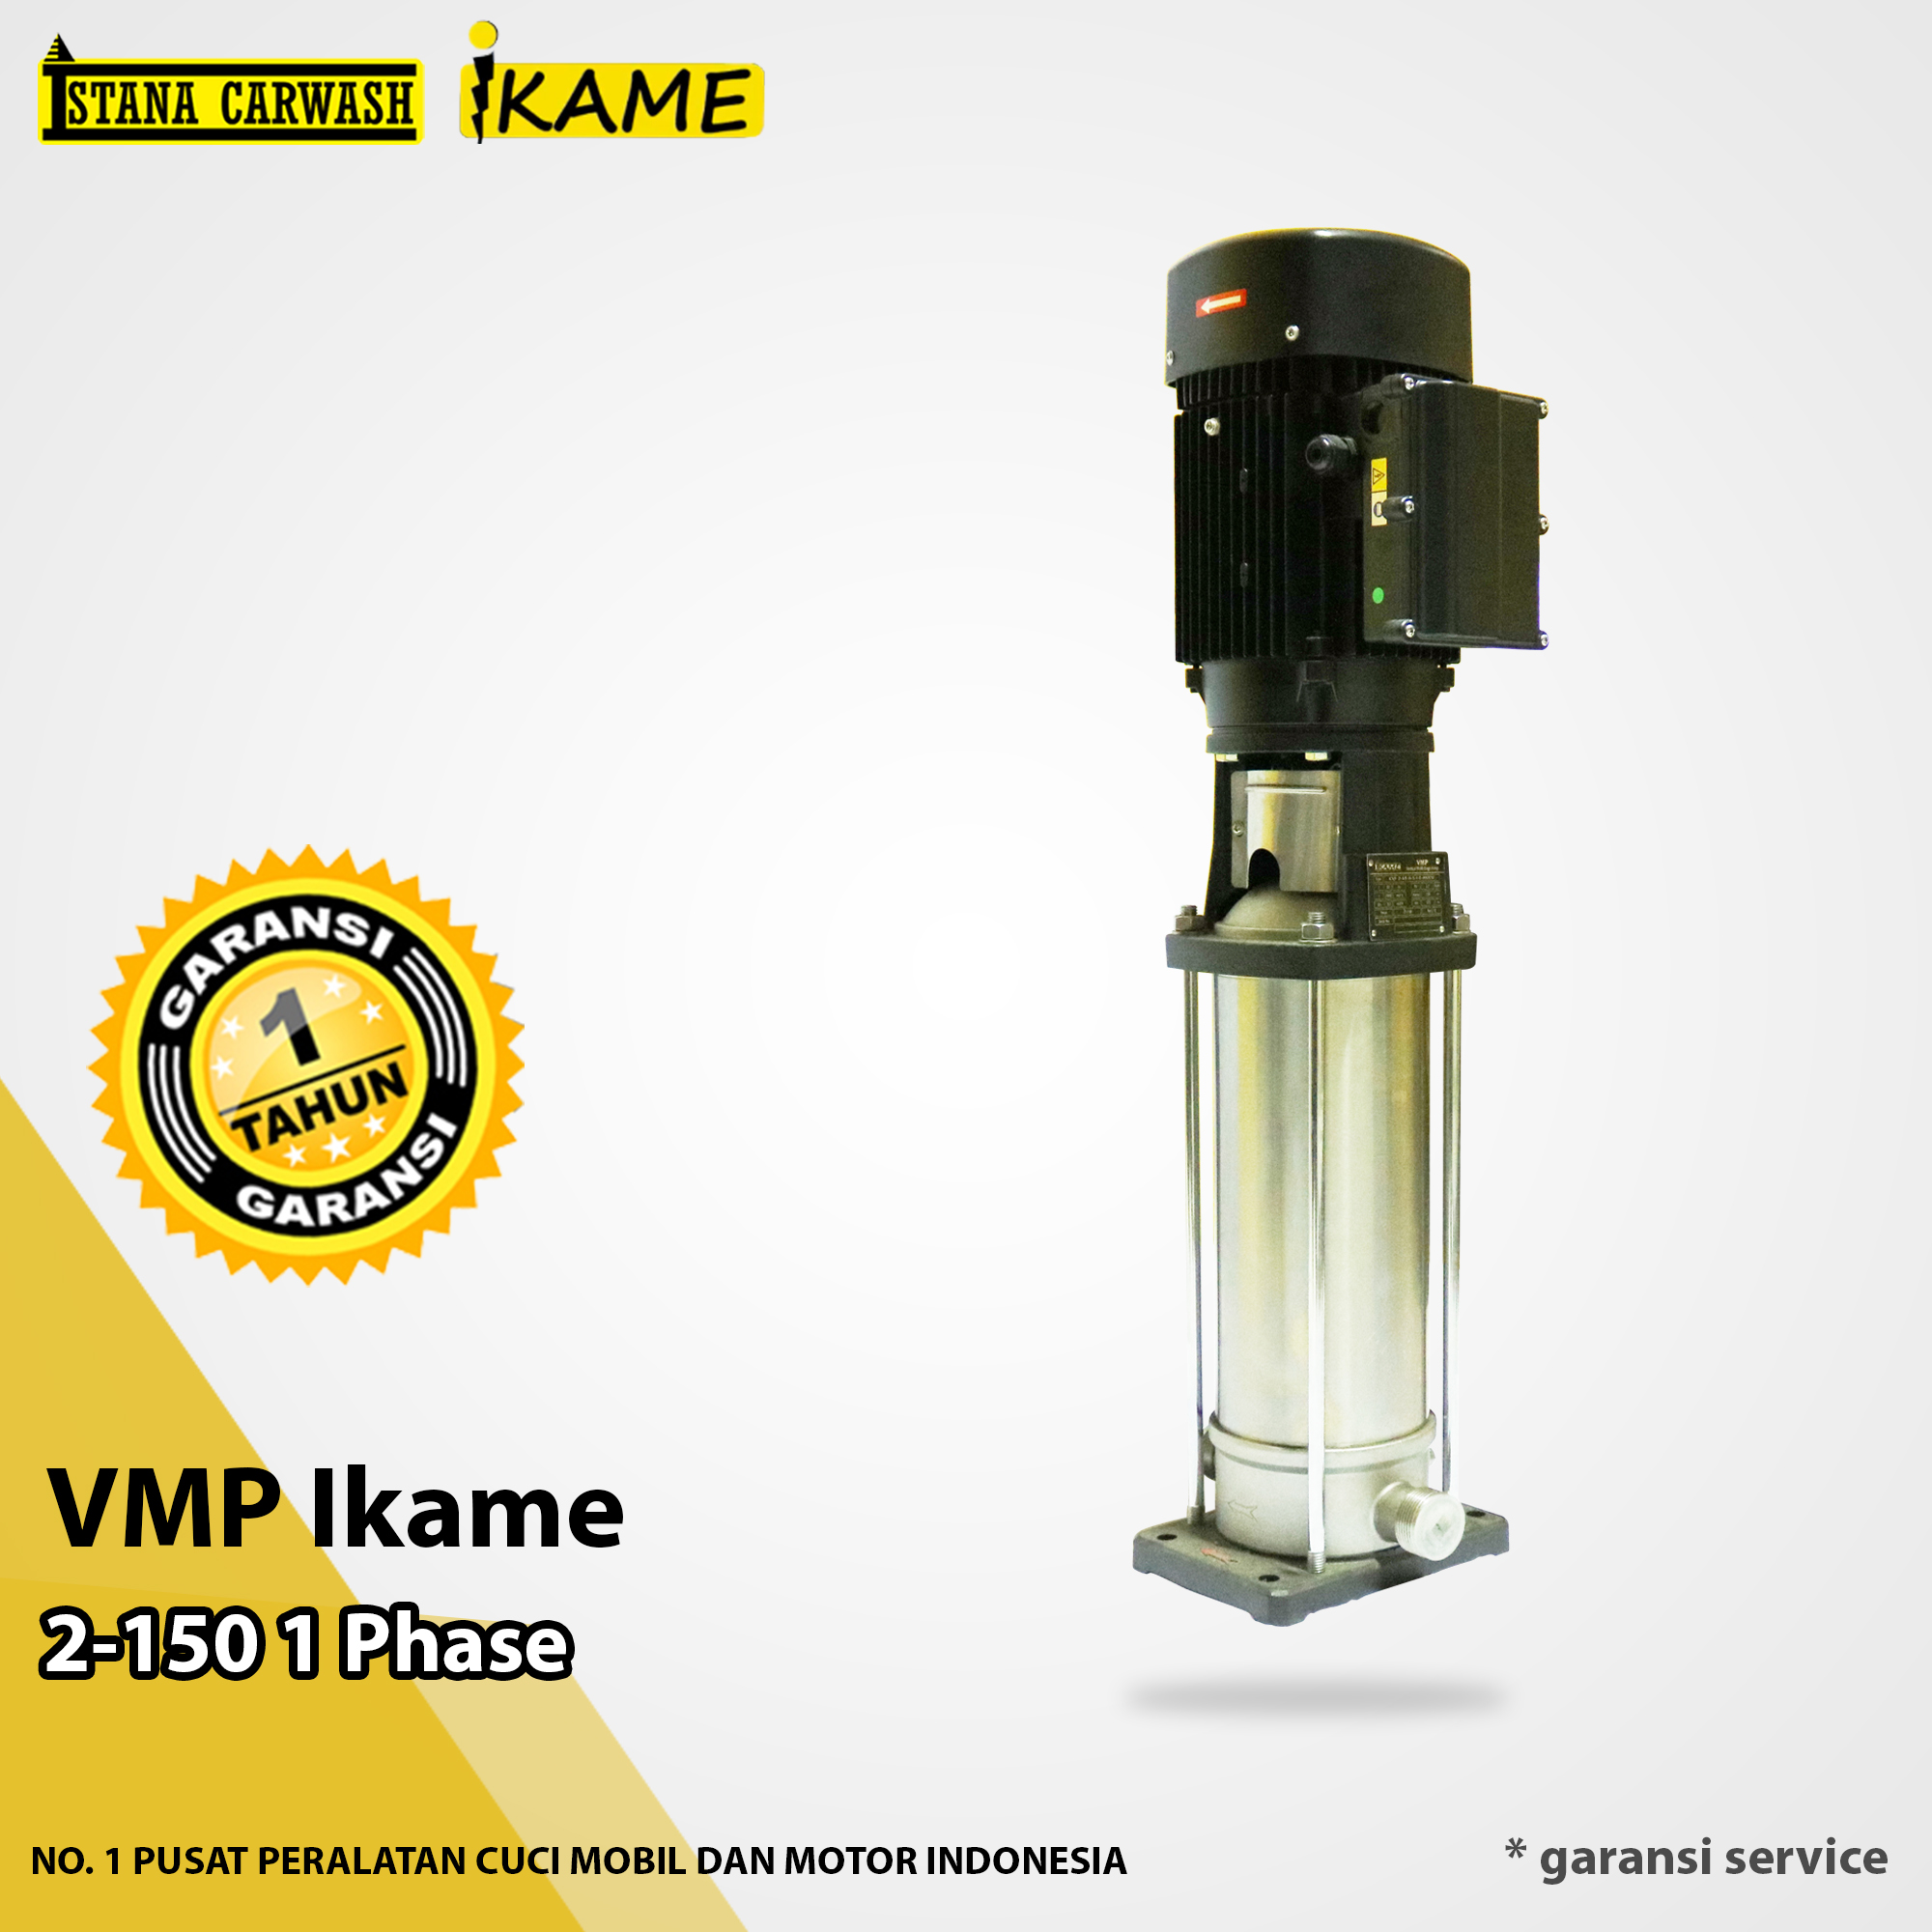 VMP Ikame 2 – 150, 1 Phase